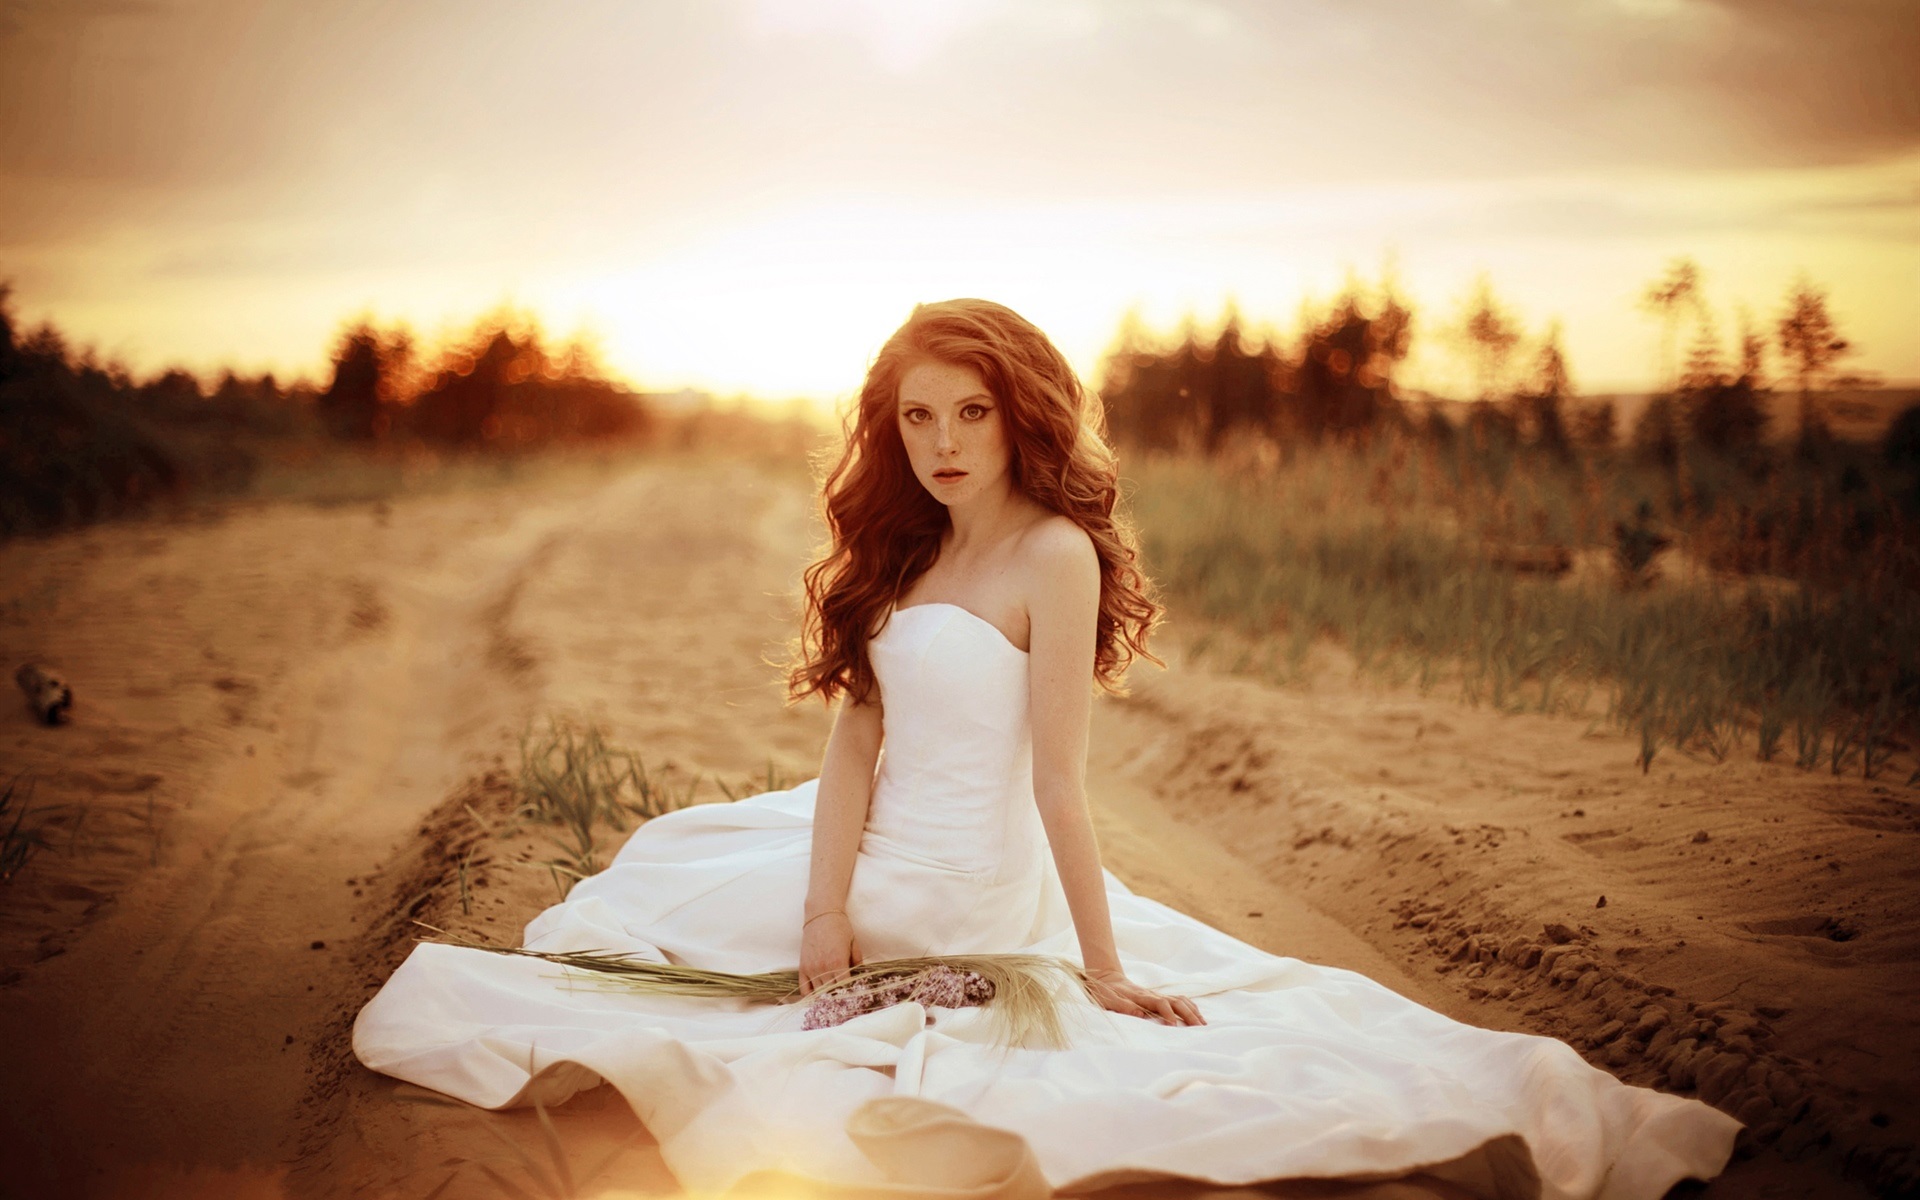 Beautiful-bride-girl-white-dress-sand-road_1920x1200.jpg